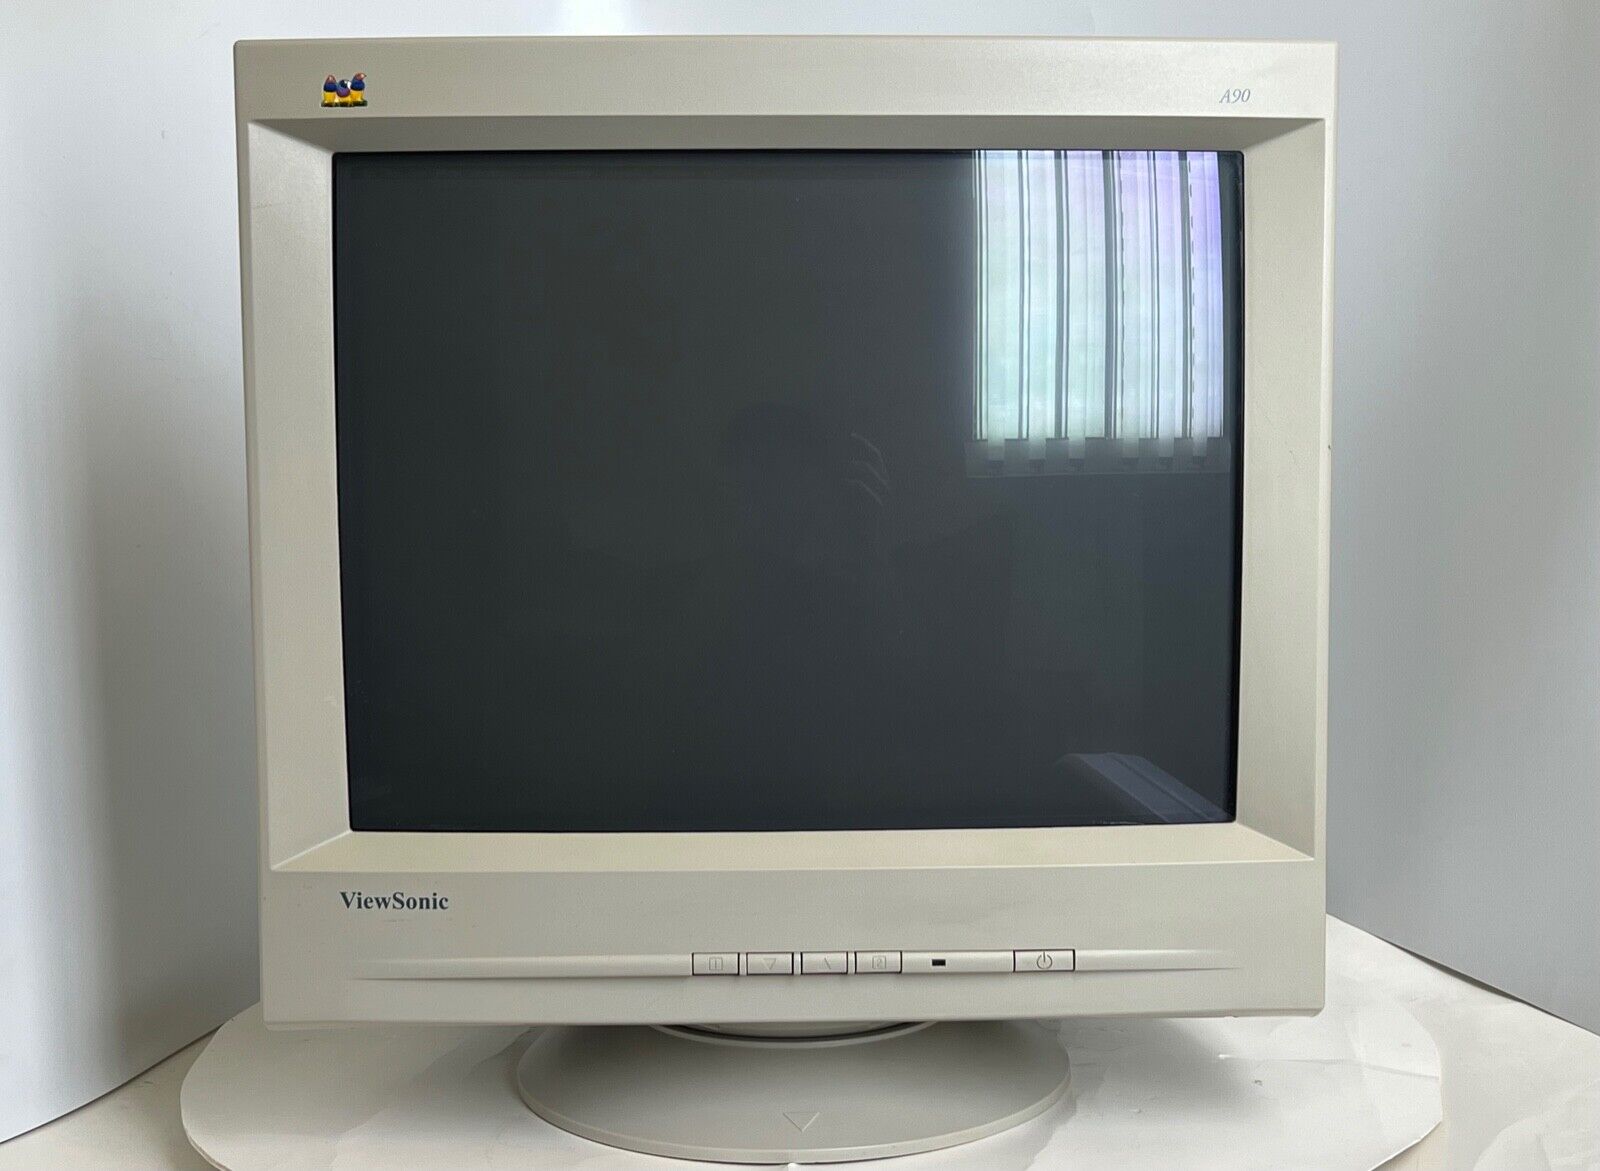 ViewSonic A90 19” CRT Monitor + Orig Box - Vintage Gaming - 1600 x 1200 Max Res